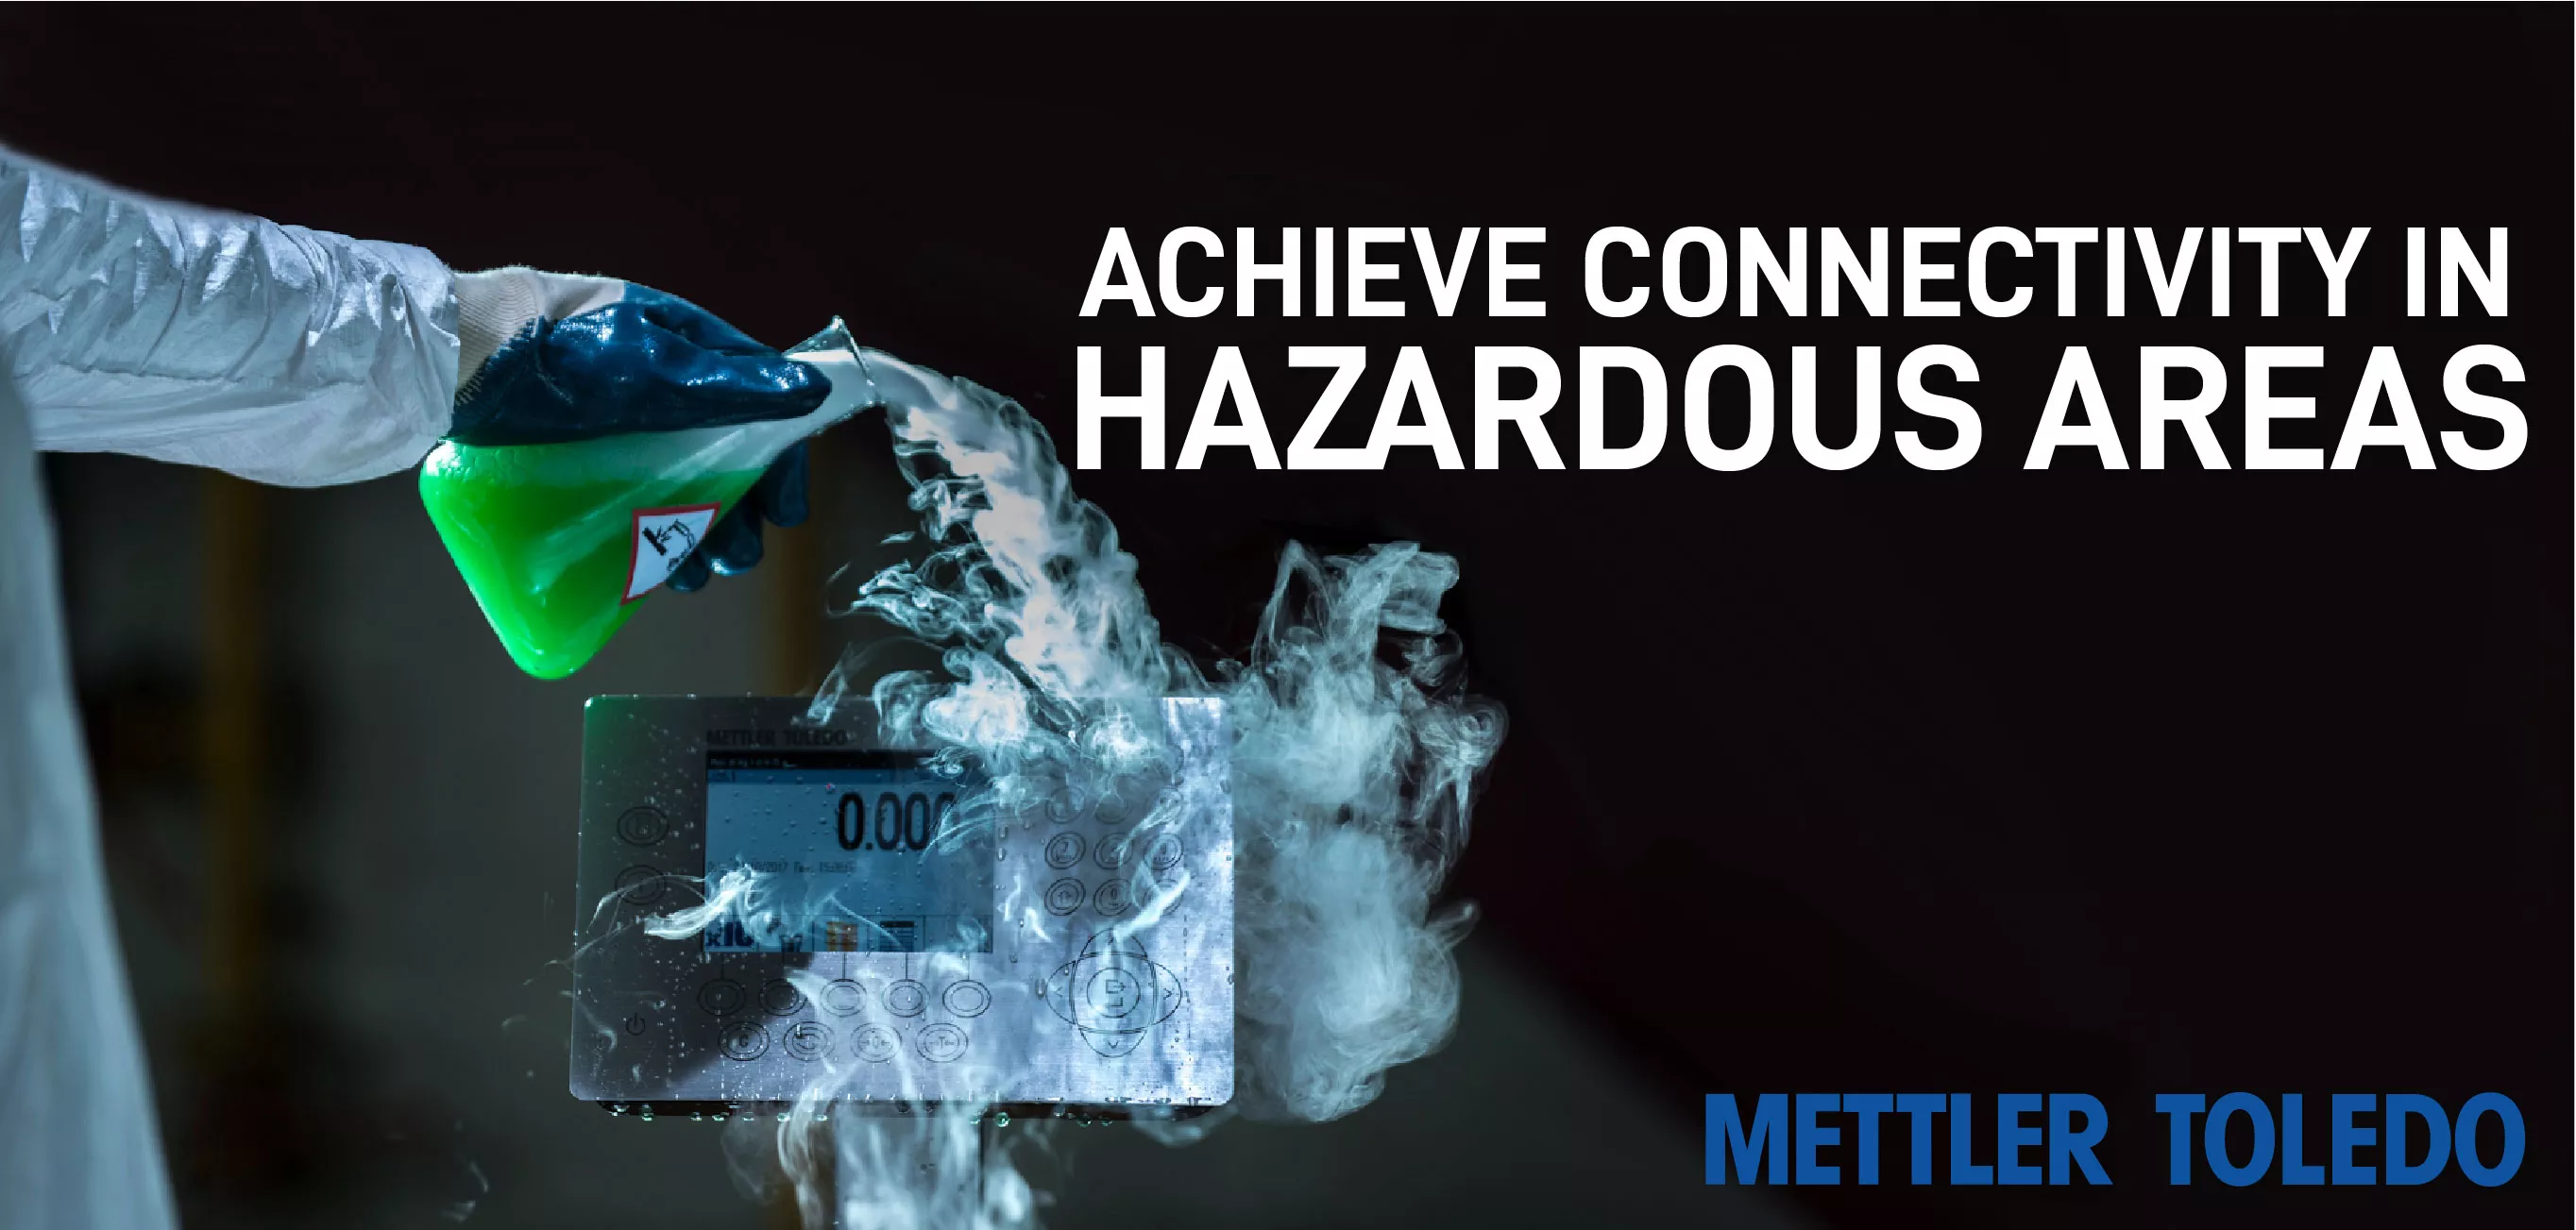 Achieve Connectivity in Hazardous Areas by METTLER TOLEDO